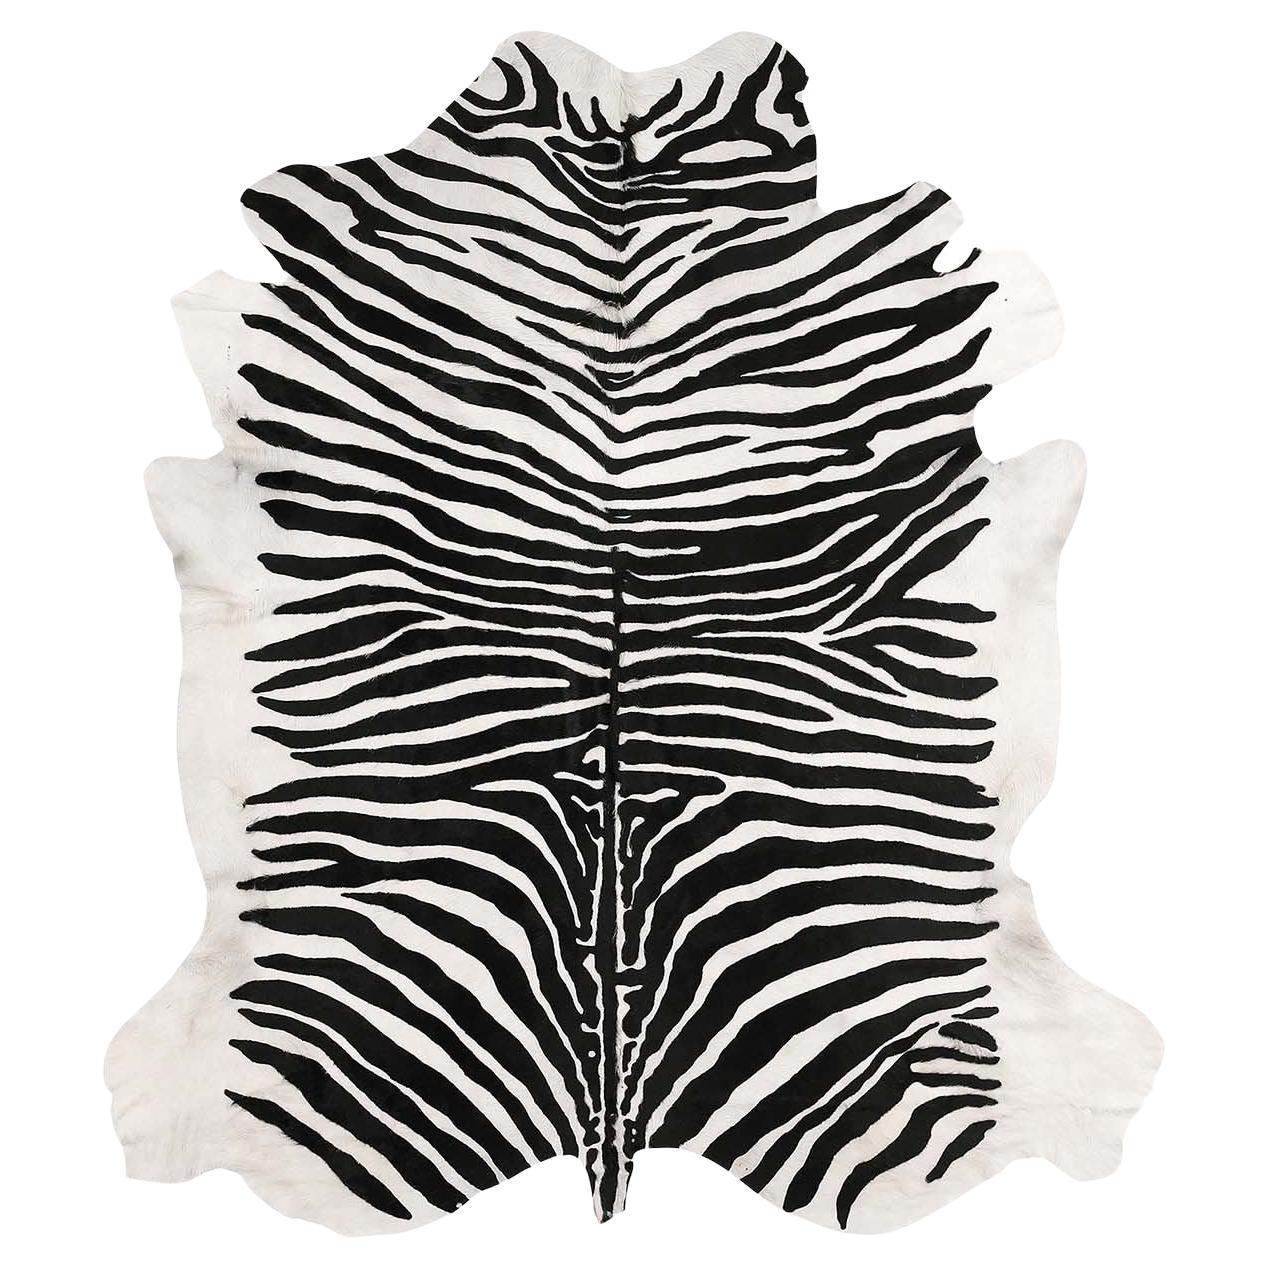 Zebra-Striped Printed Leather Rug Black & White